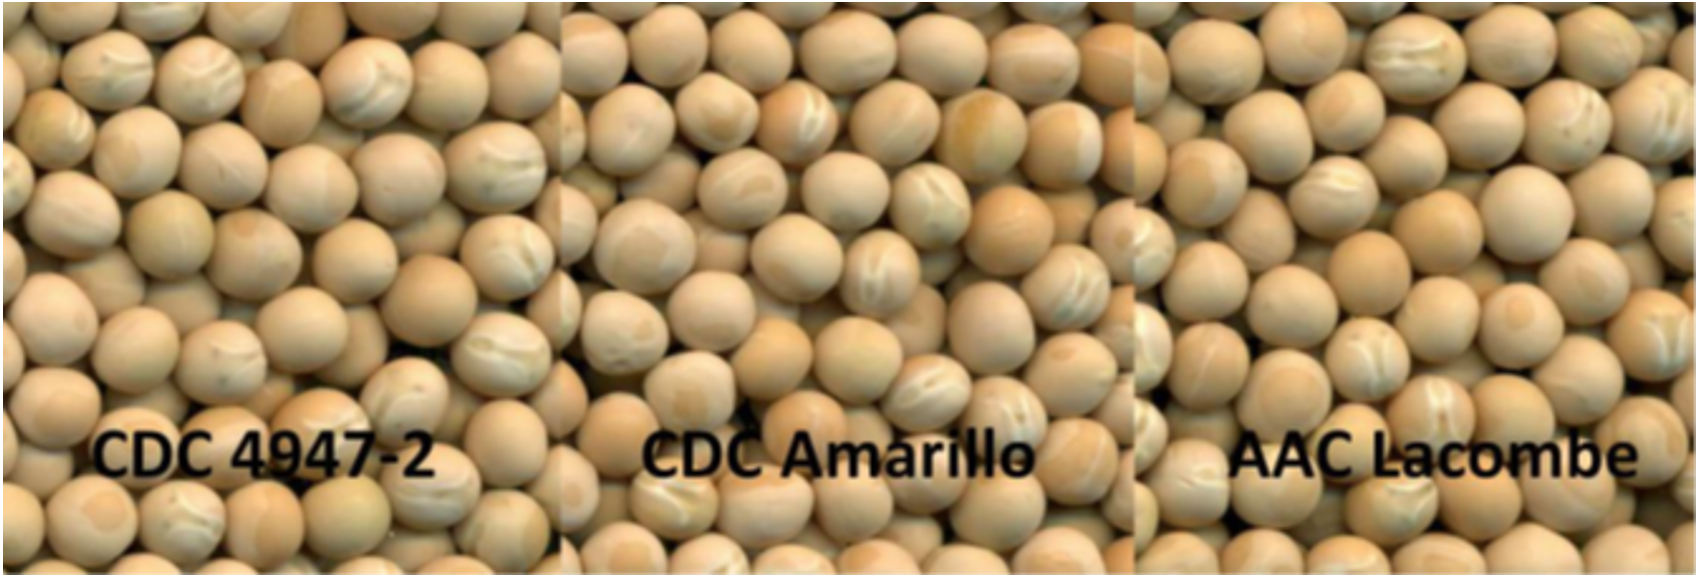 CDC Tollefson Pea Seed vs Amarillo vs AAC Lacombe